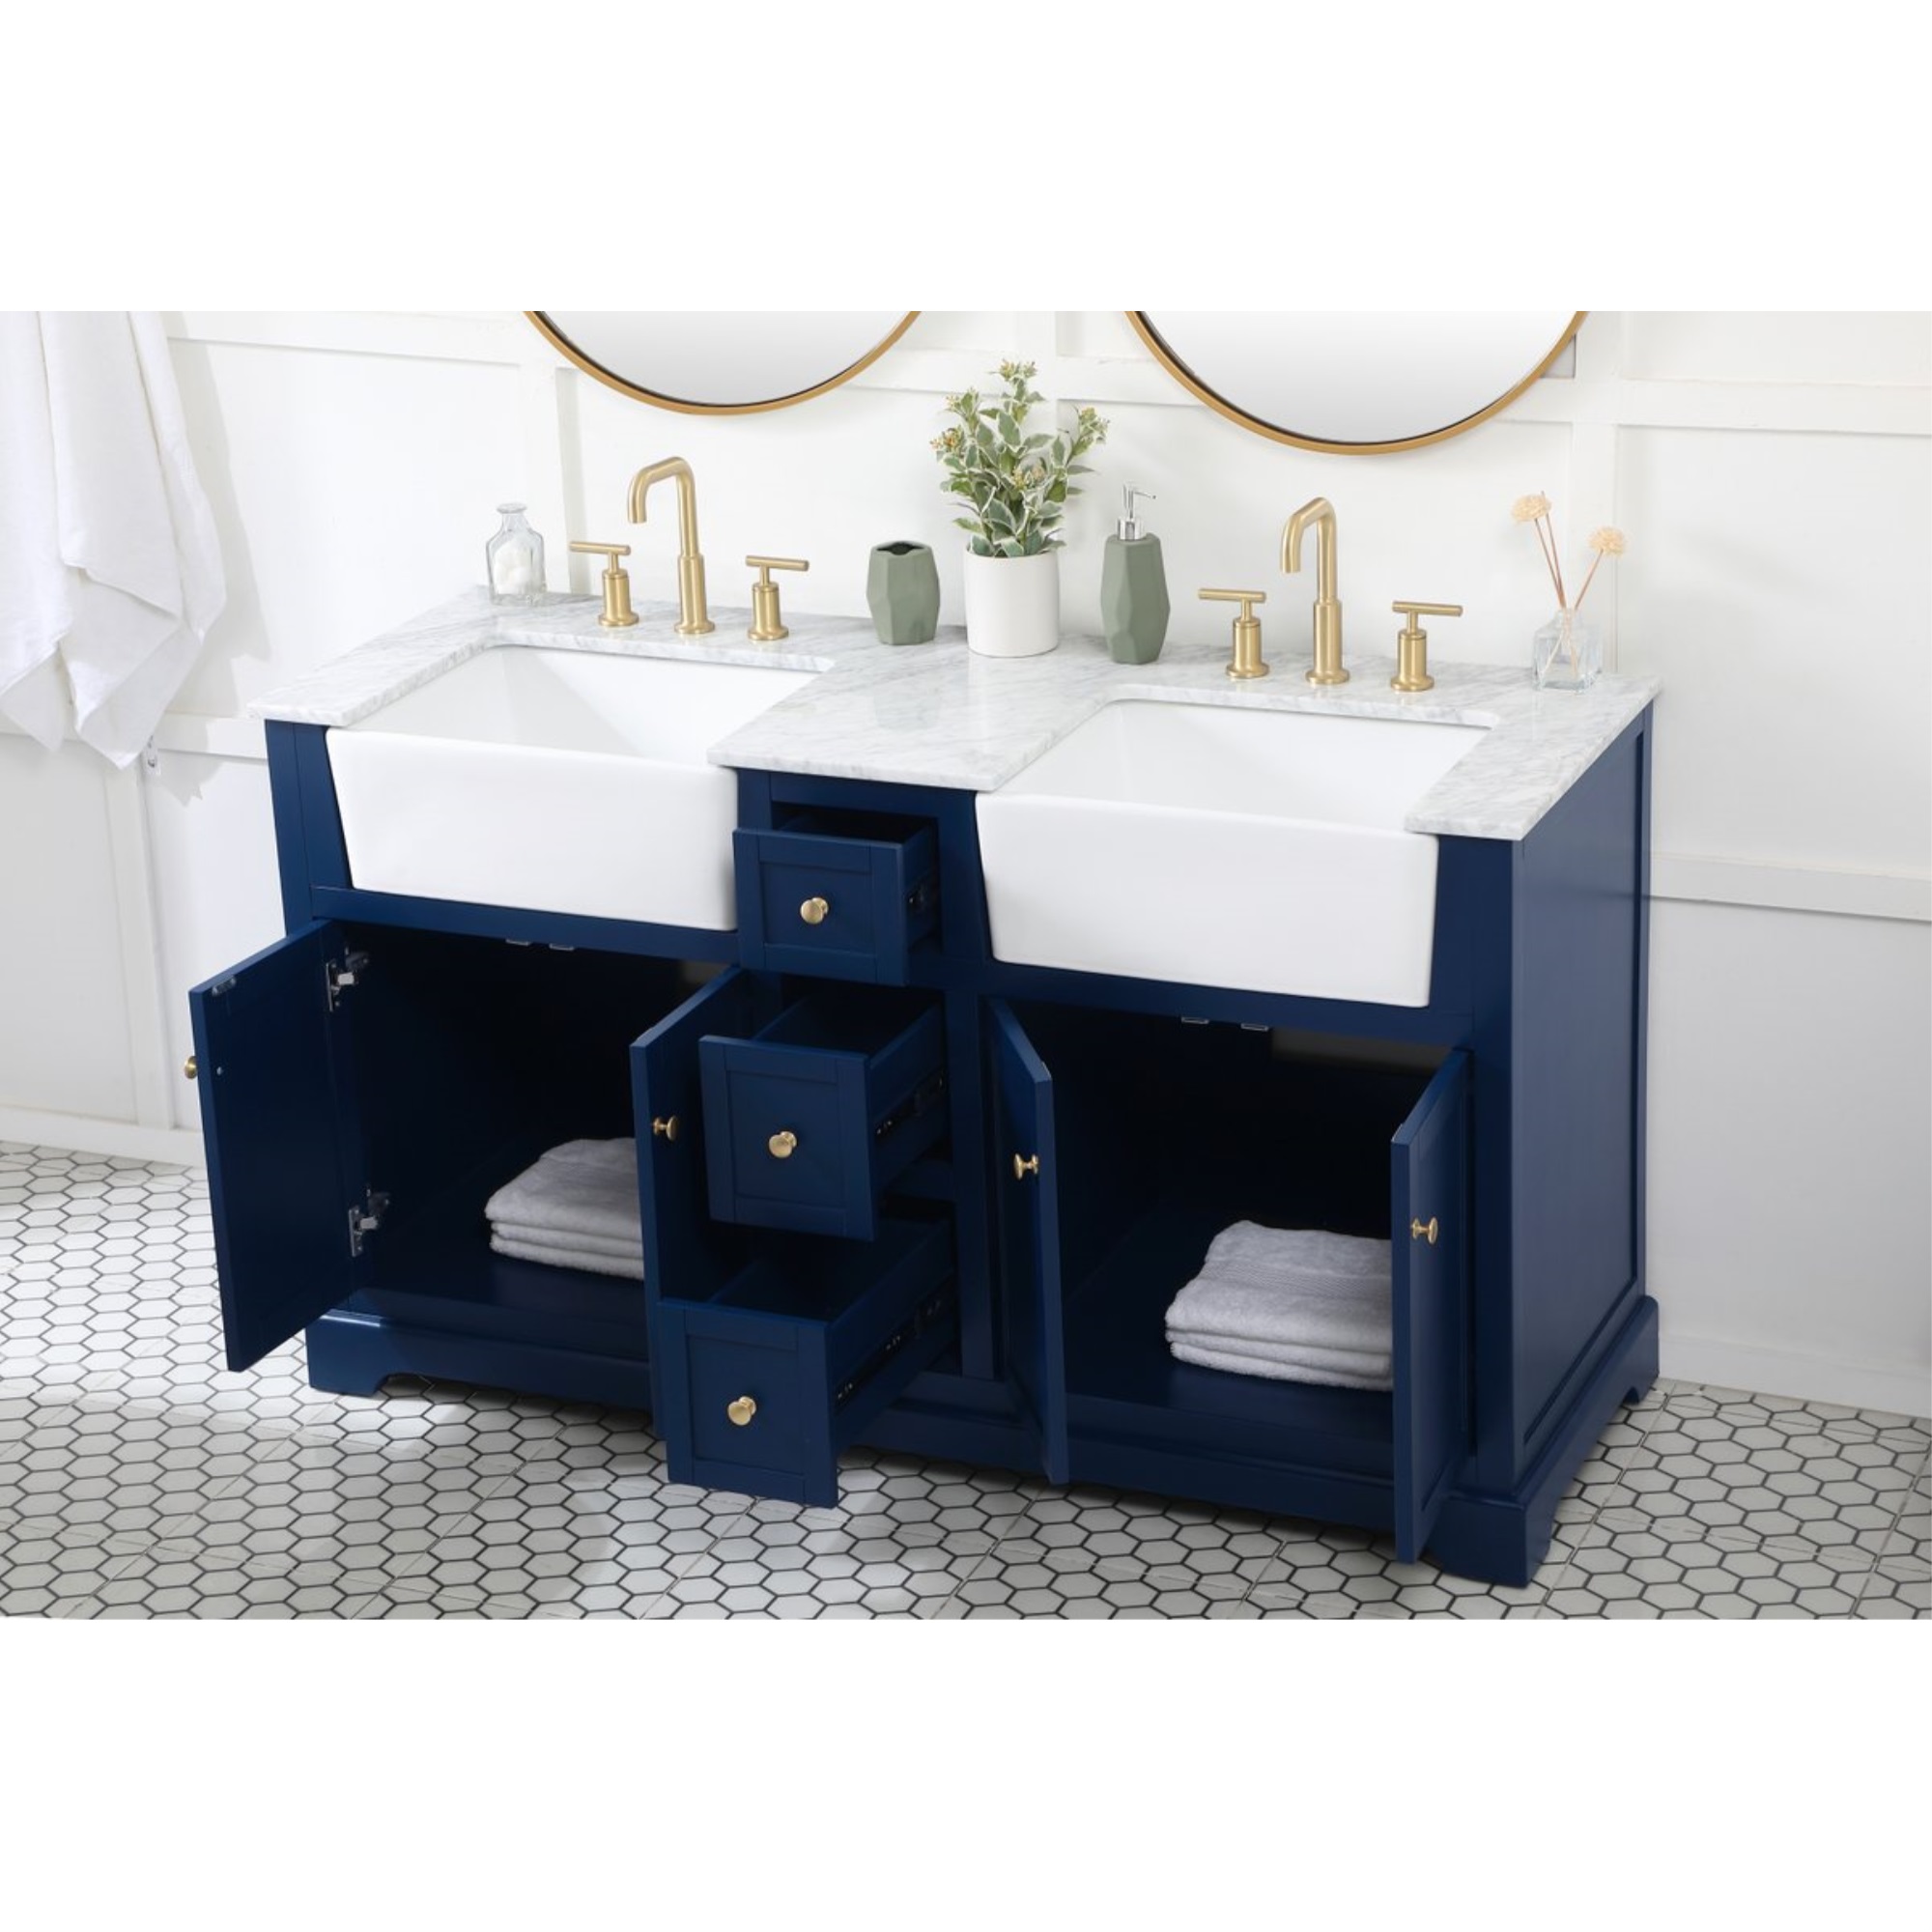 Elegant Decor 60 inch double bathroom vanity in blue